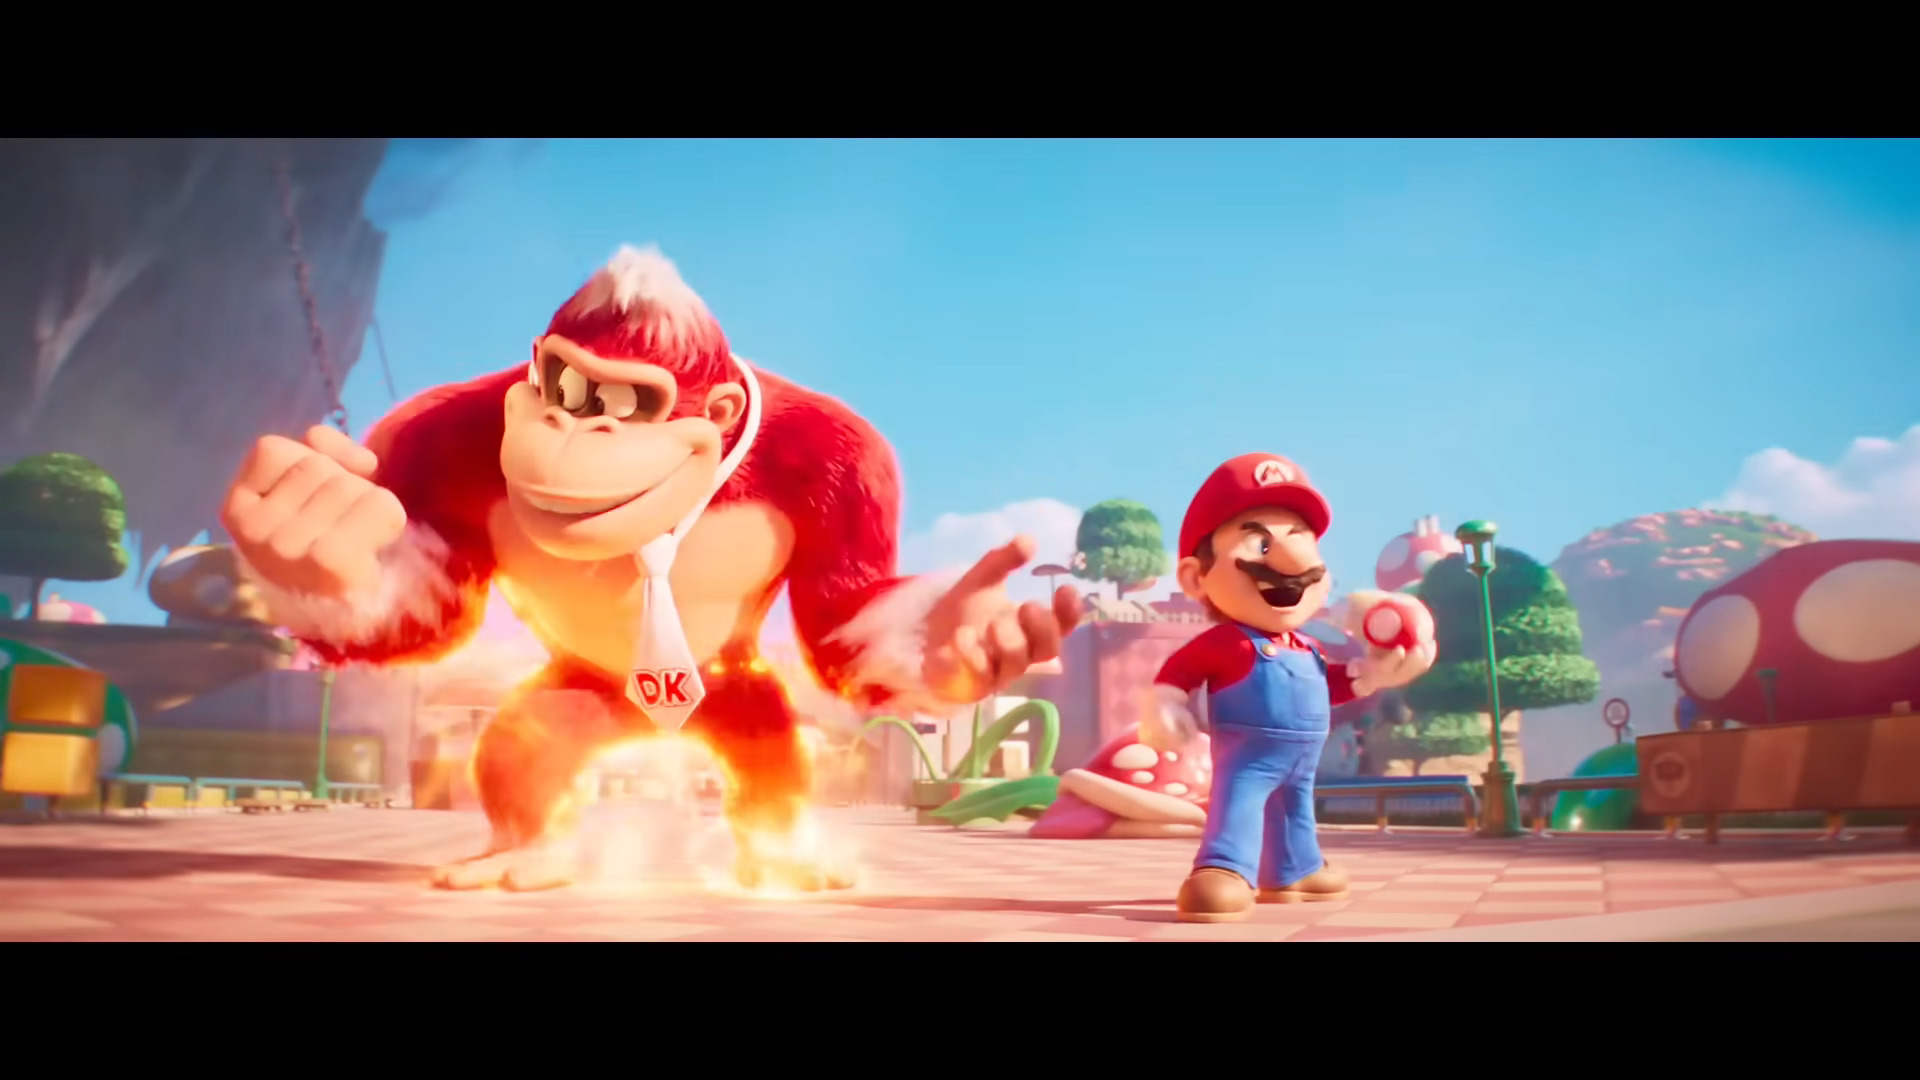 Donkey Kong (Seth Rogen) and Mario (Chris Pratt) power-up in The Super Mario Bros. Movie (2023), Illumination Entertainment